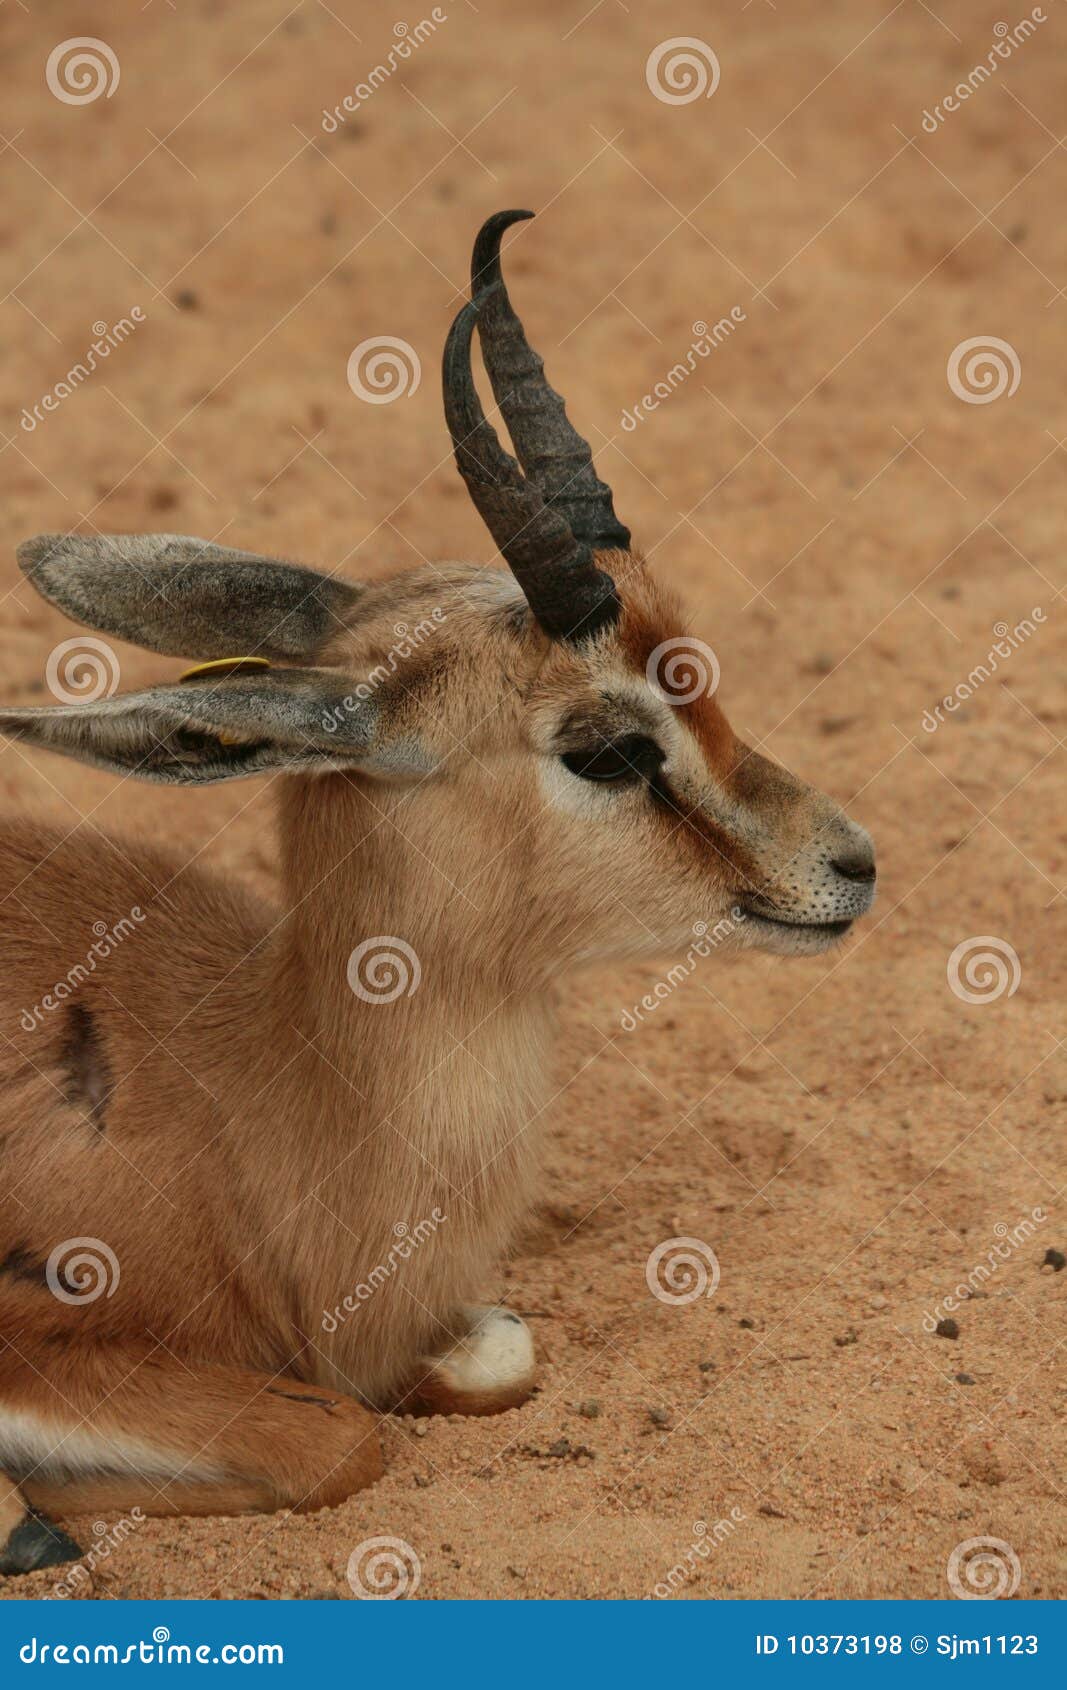 young gazelle